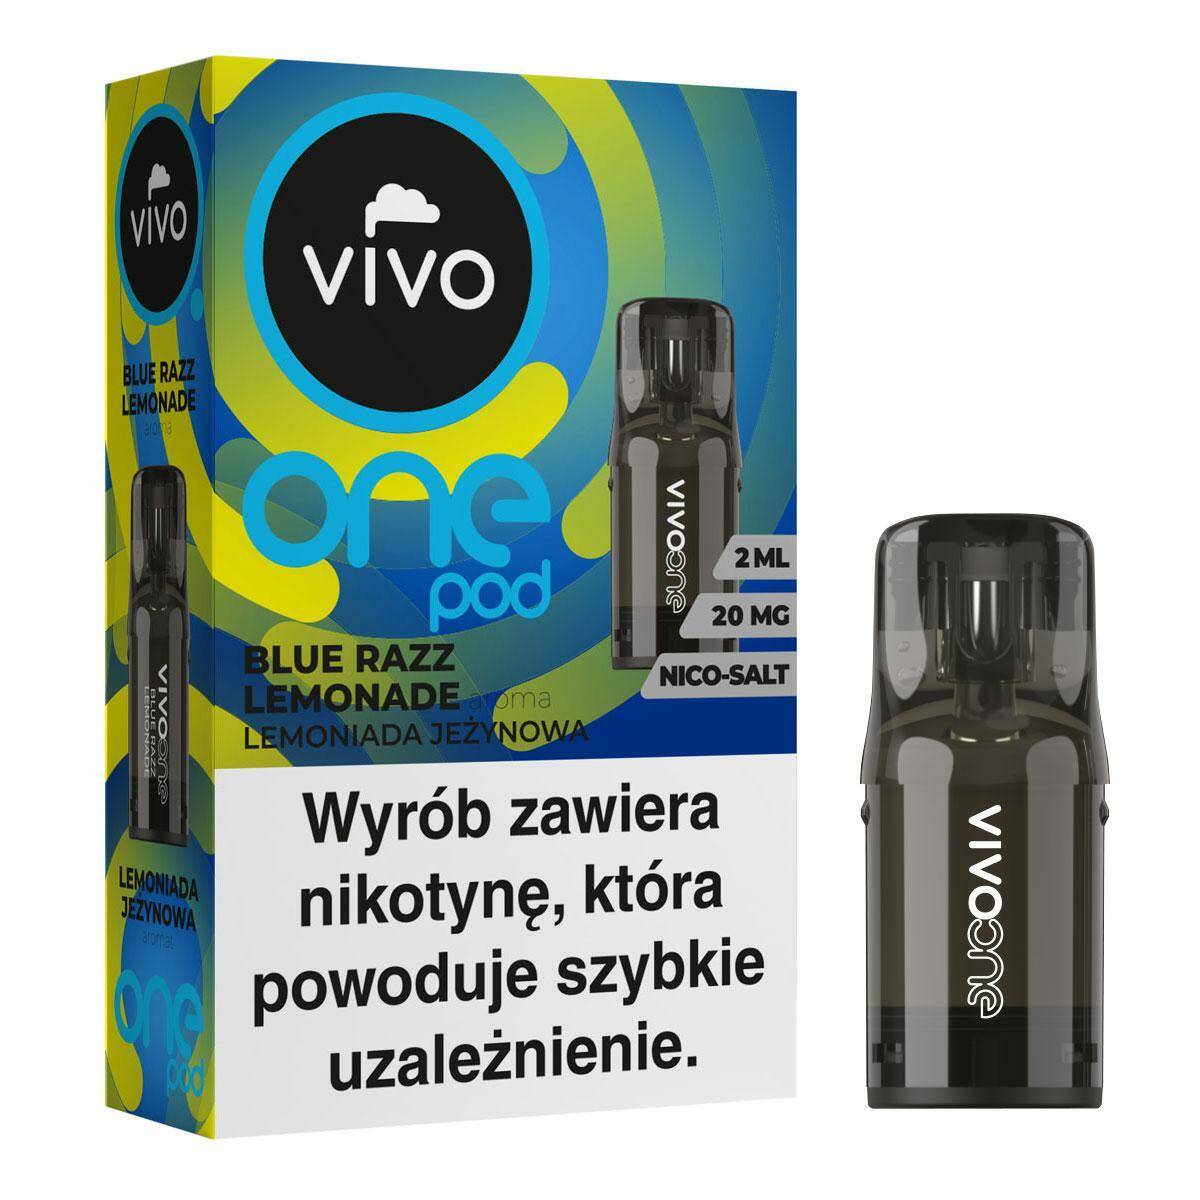 VIVO ONE POD - Blue Razz Lemonade 20mg (2ml)